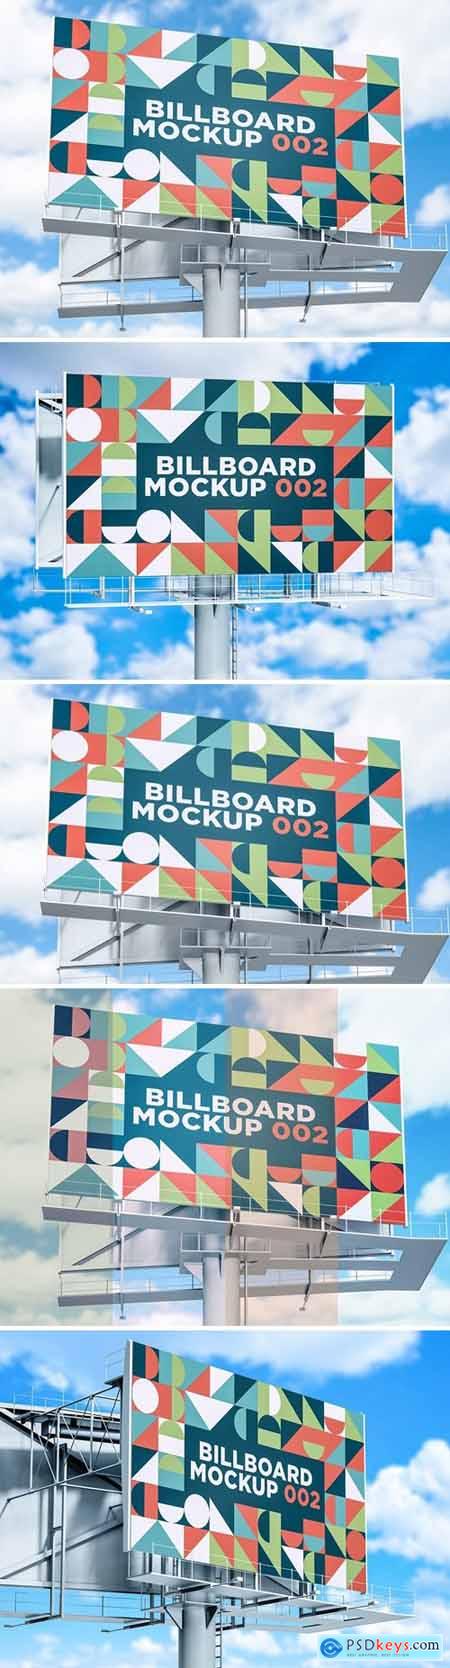 Billboard Mockup 002